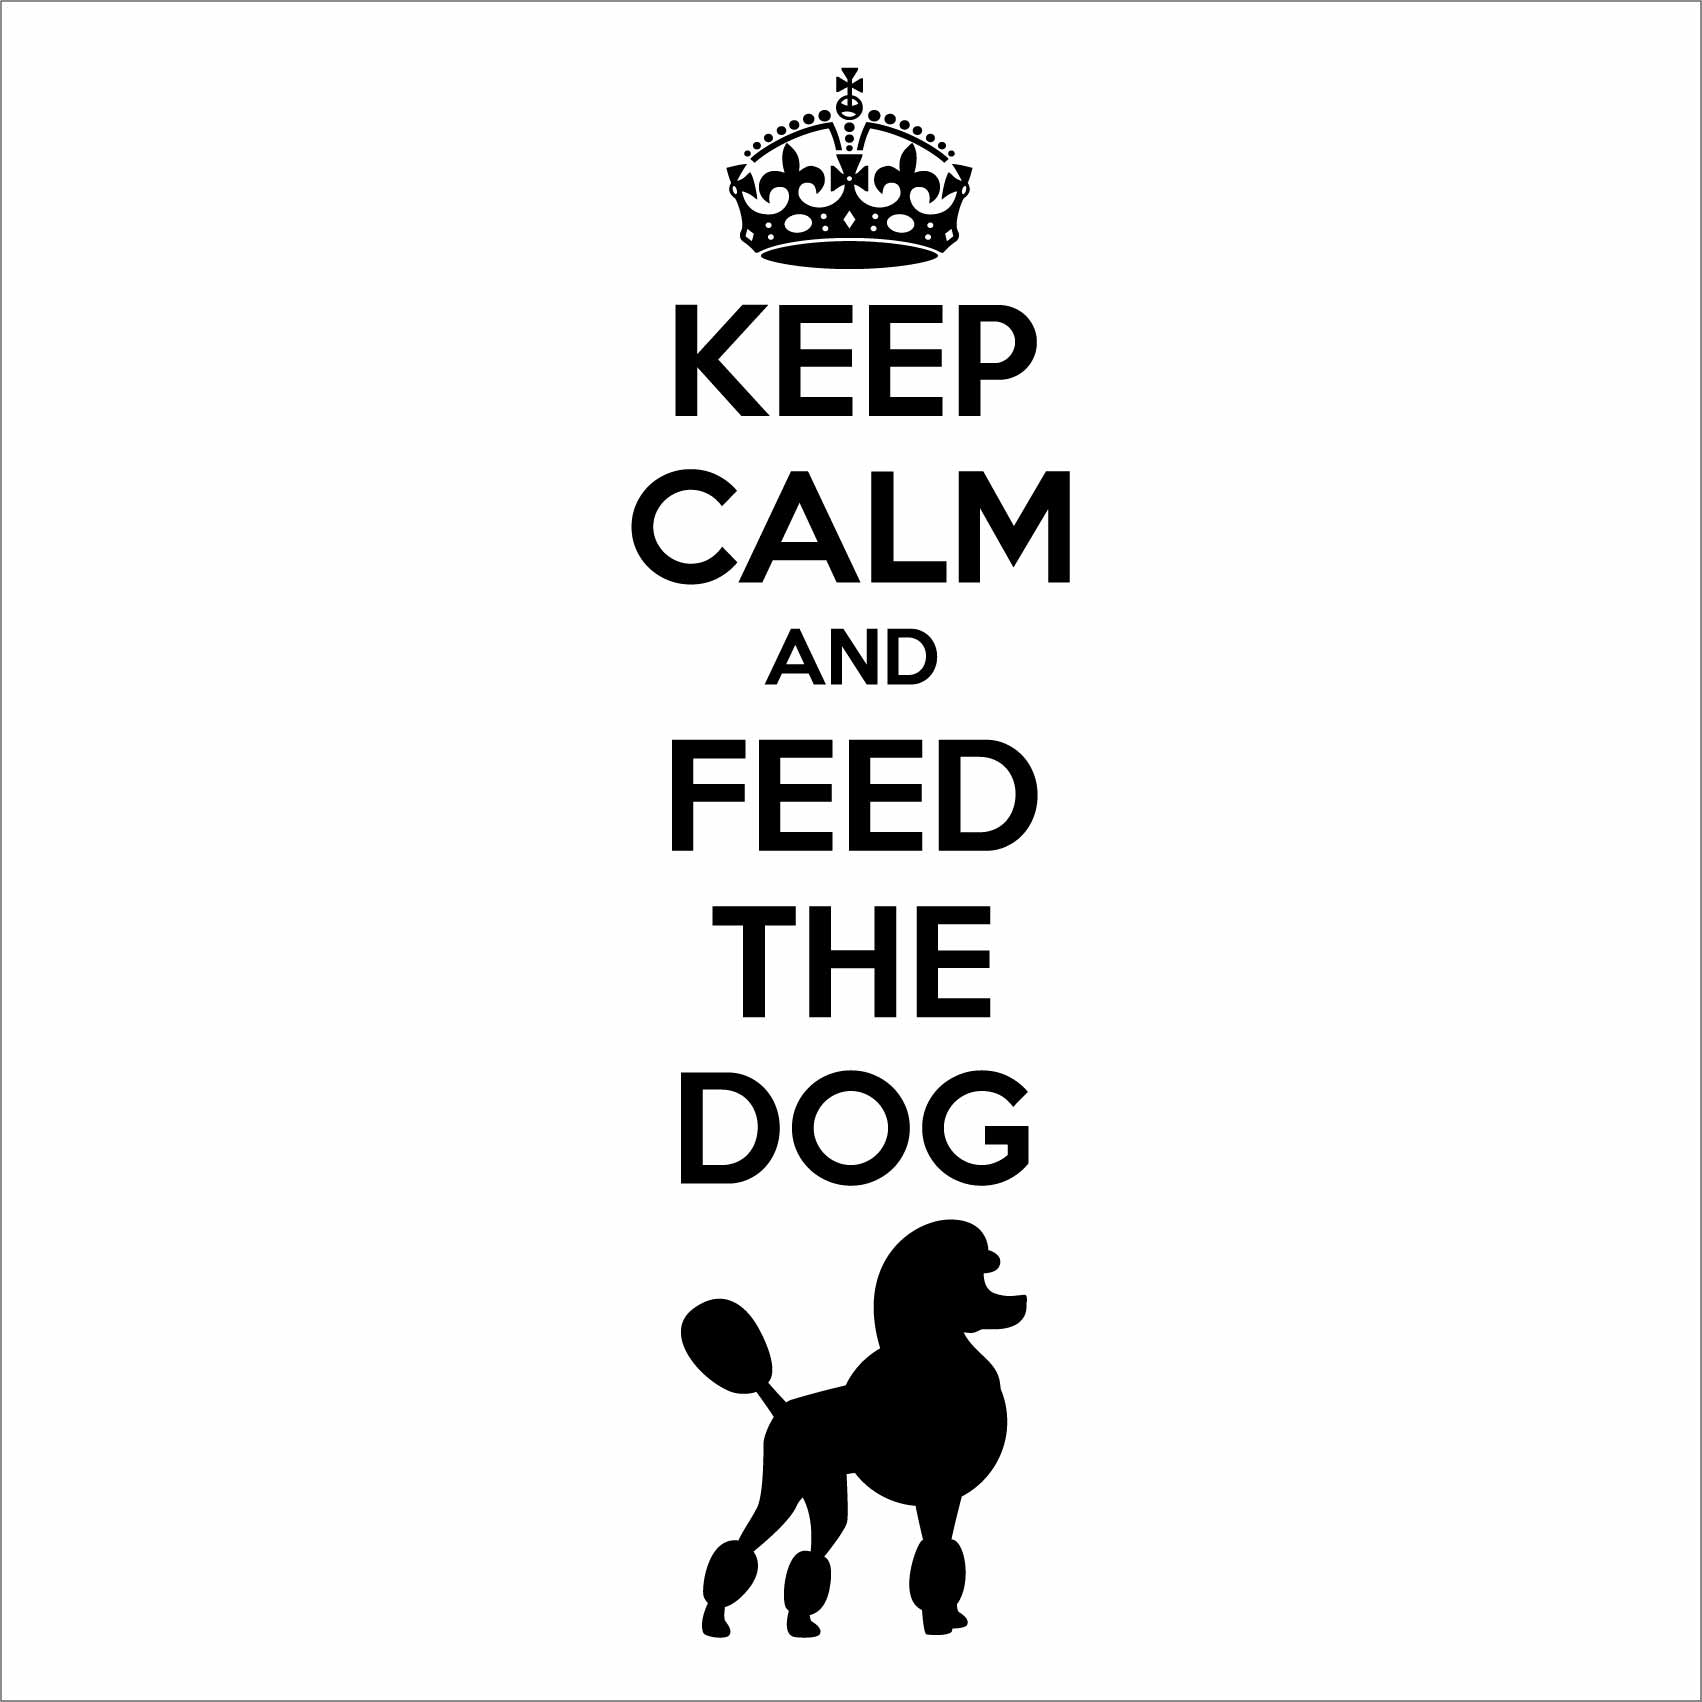 stickers-chien-caniche-keep-calm-ref2chien-autocollant-muraux-sticker-deco-feed-the-dog-cuisine-salon-fb